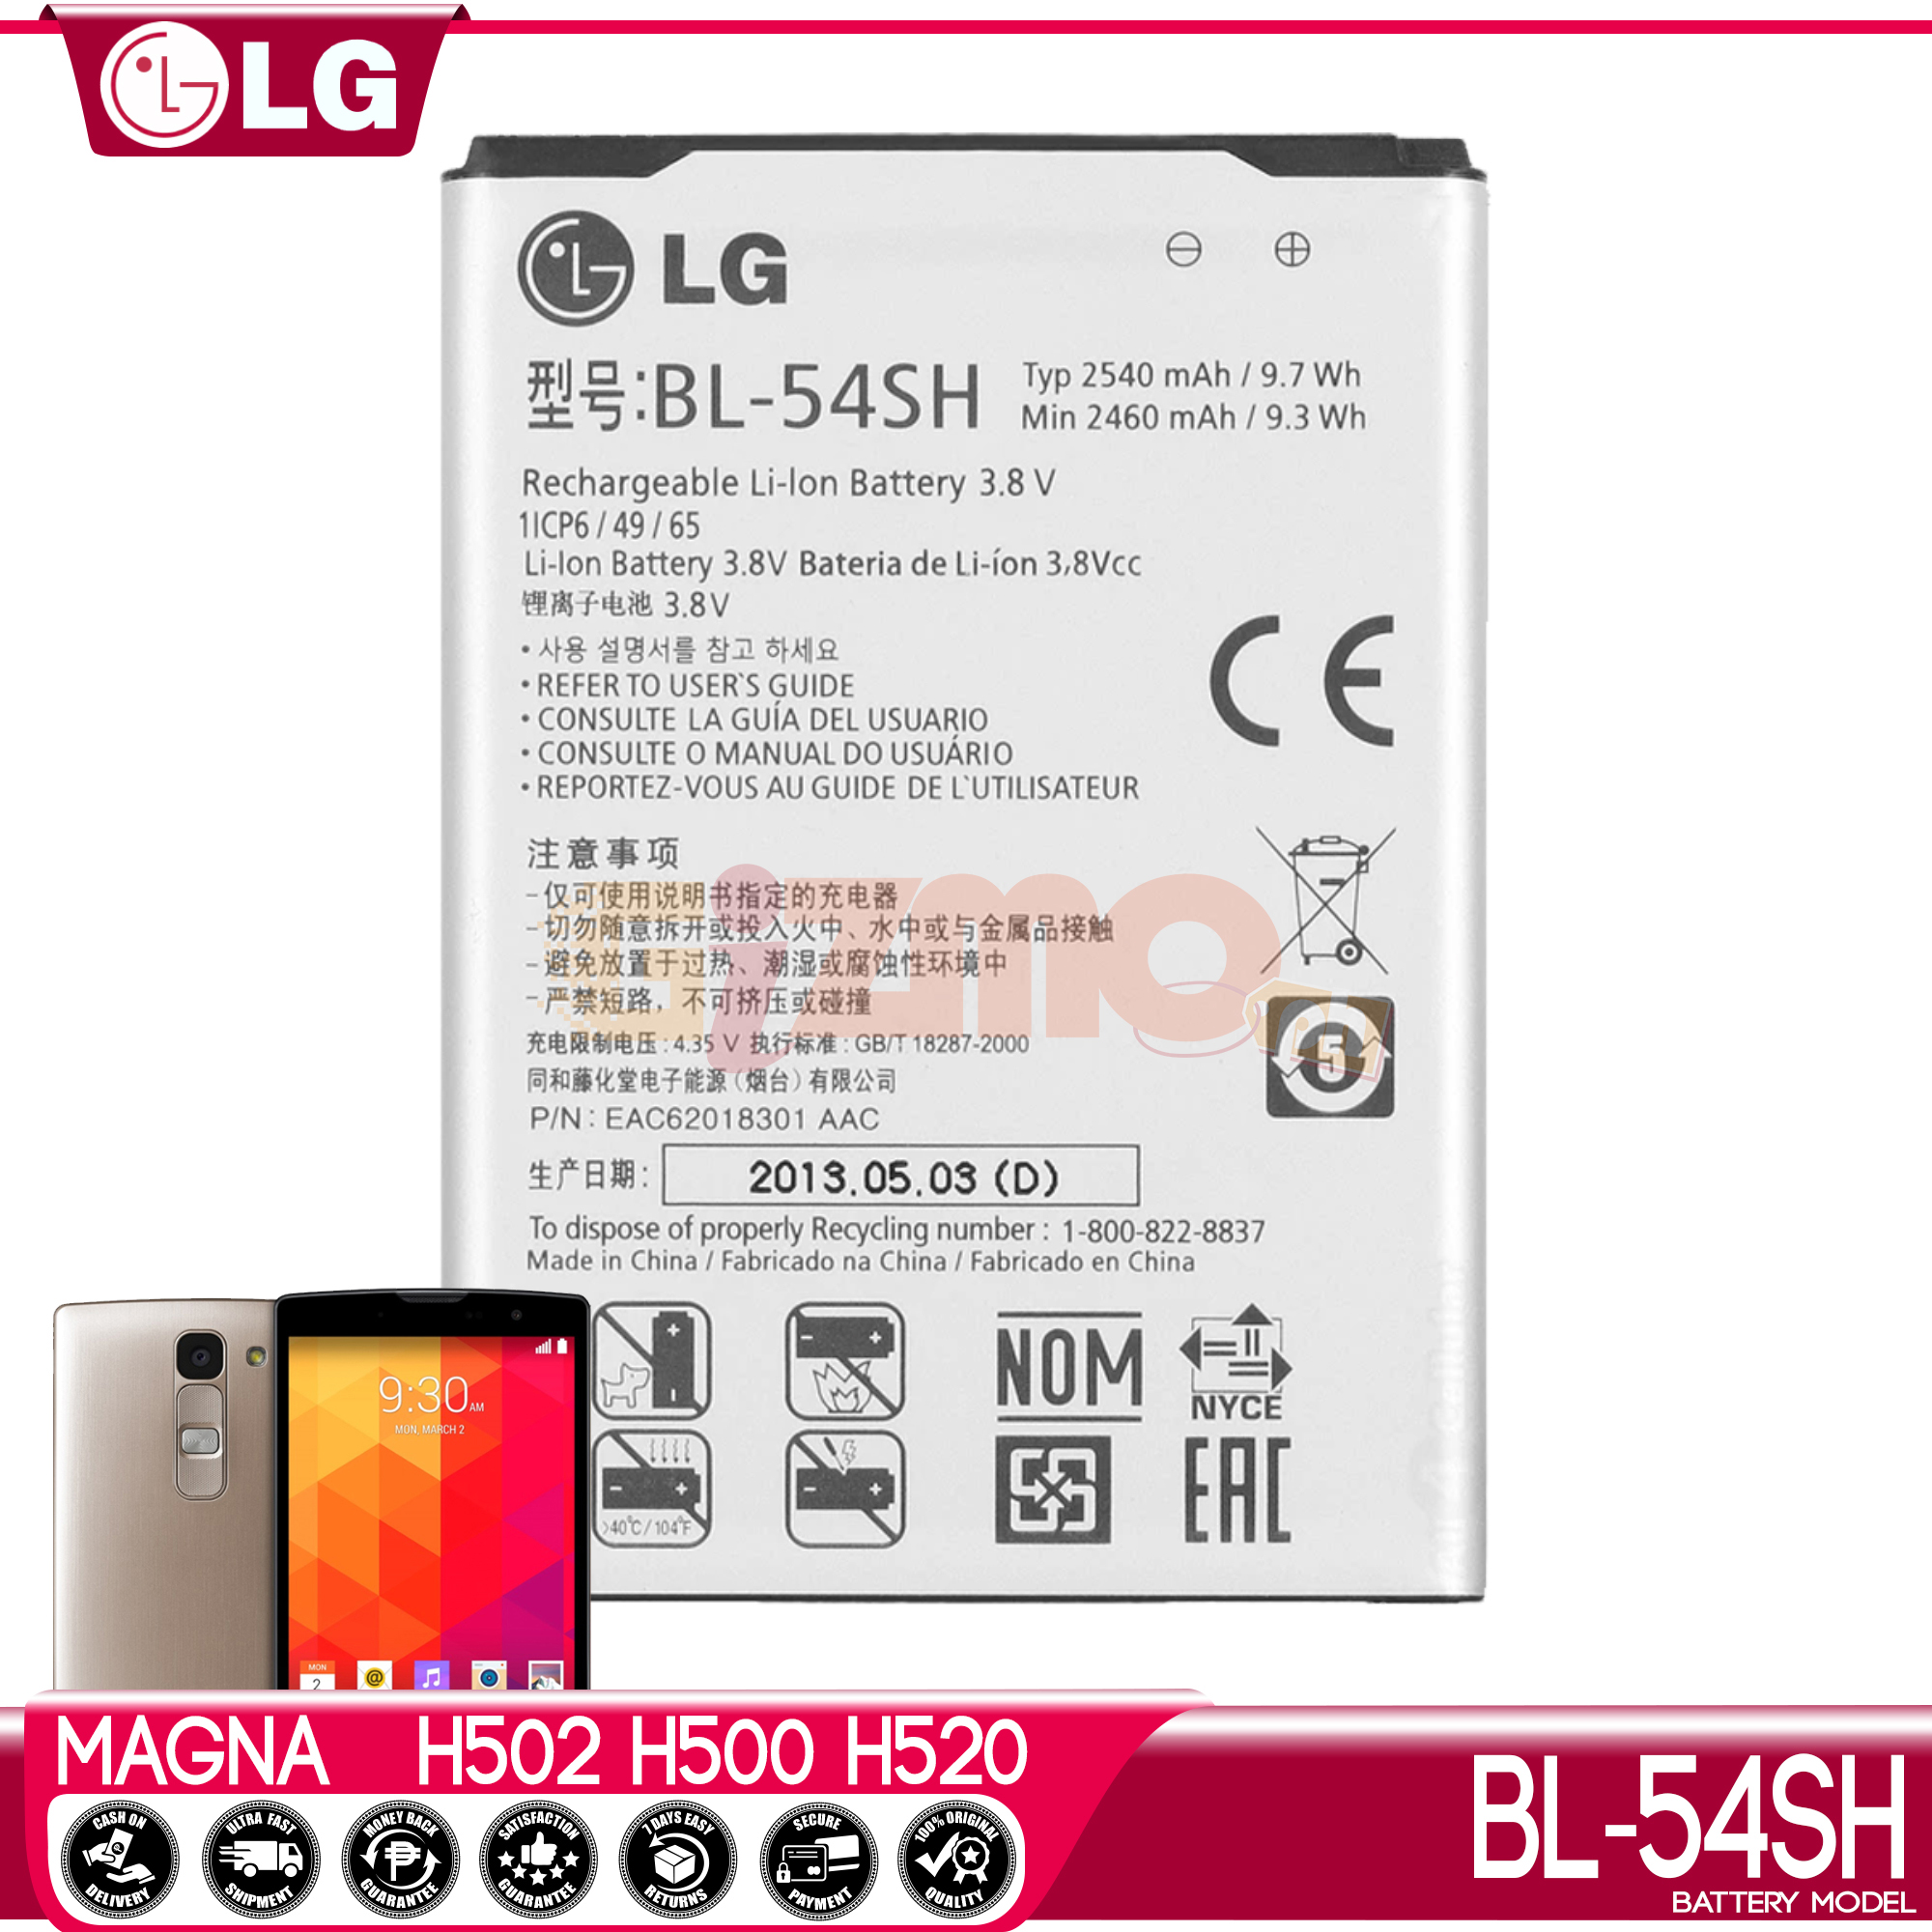  Battery BL-54SH Model Replacement LG Magna H502 L90 / D405 / D415  Capacity Li-Ion 2540mAh Original Equipment Manufacturer High Quality  Battery Compatible to Smart Phone  Offers Best Quality Batteries  BL54SH |